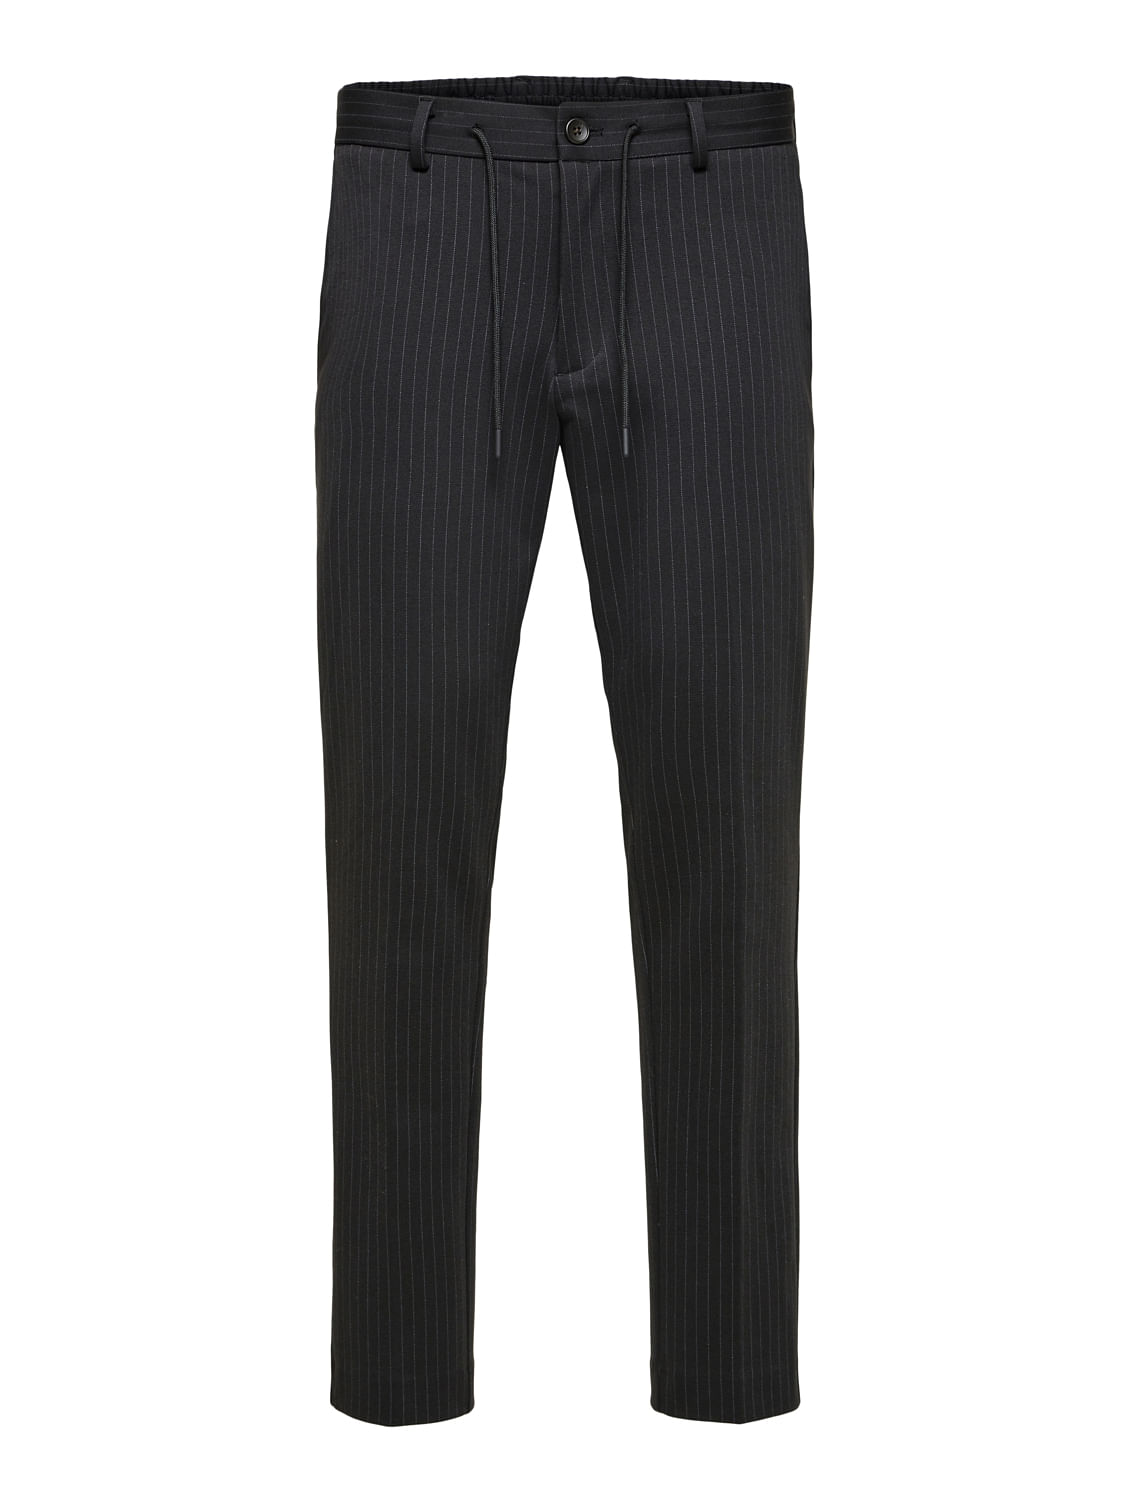 Buy Men's Blue & Black Striped Cotton Lounge Pants Online in India at  Bewakoof